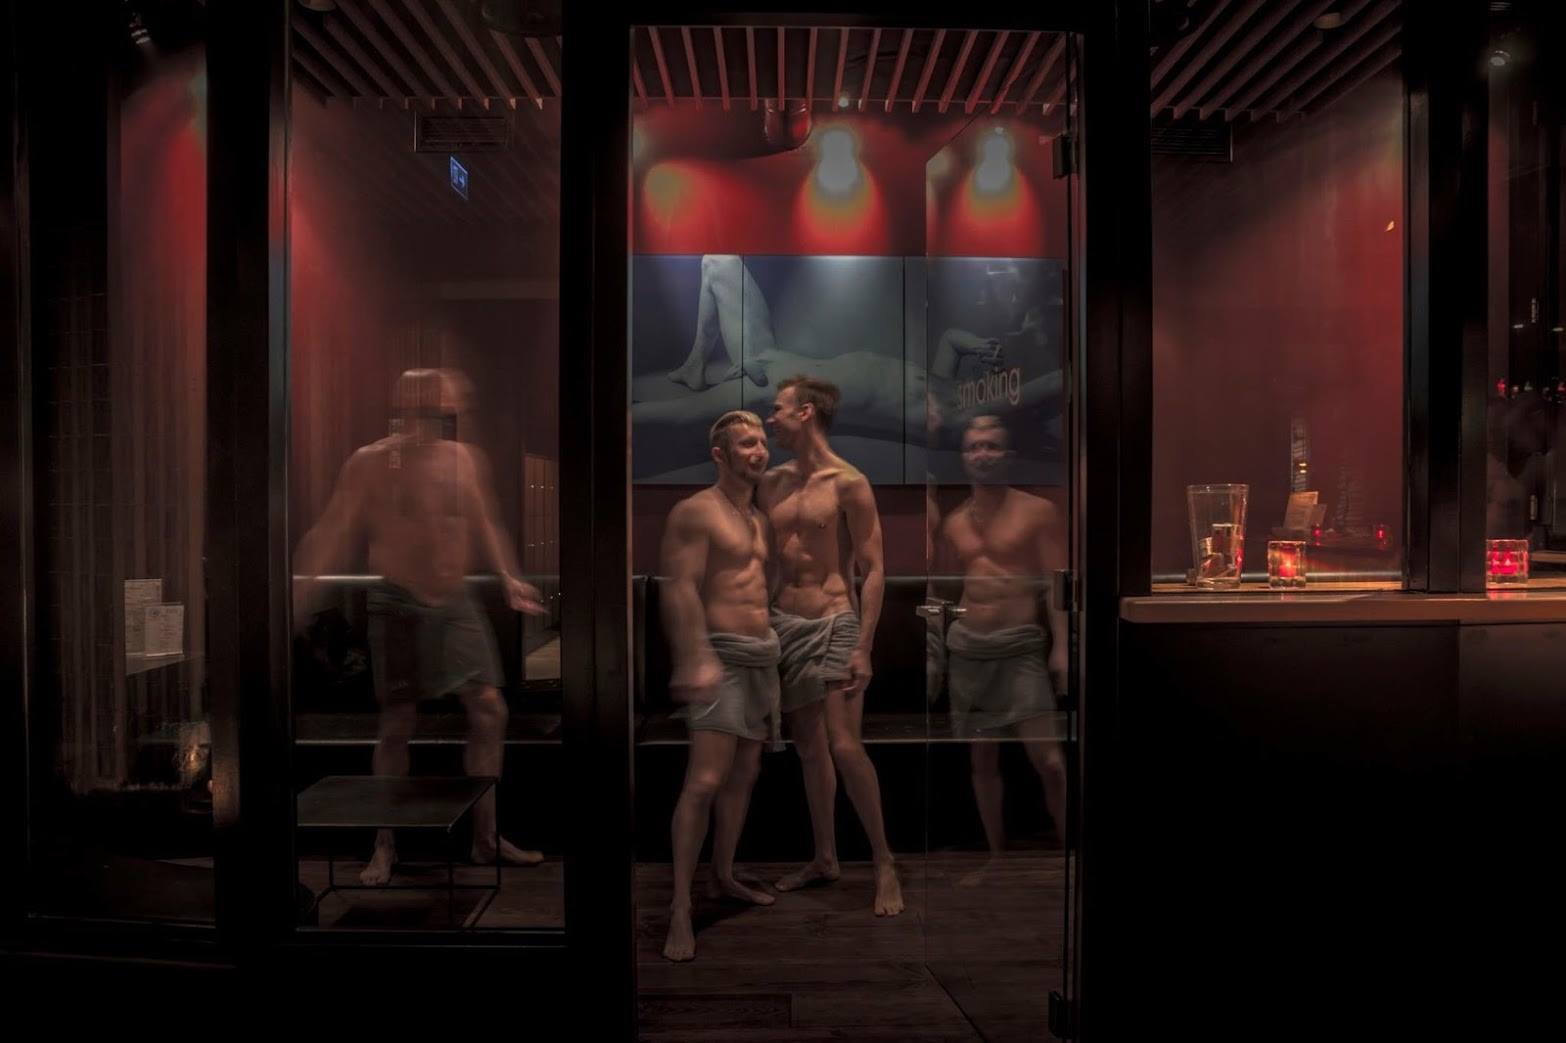 Les saunas d'Amsterdam